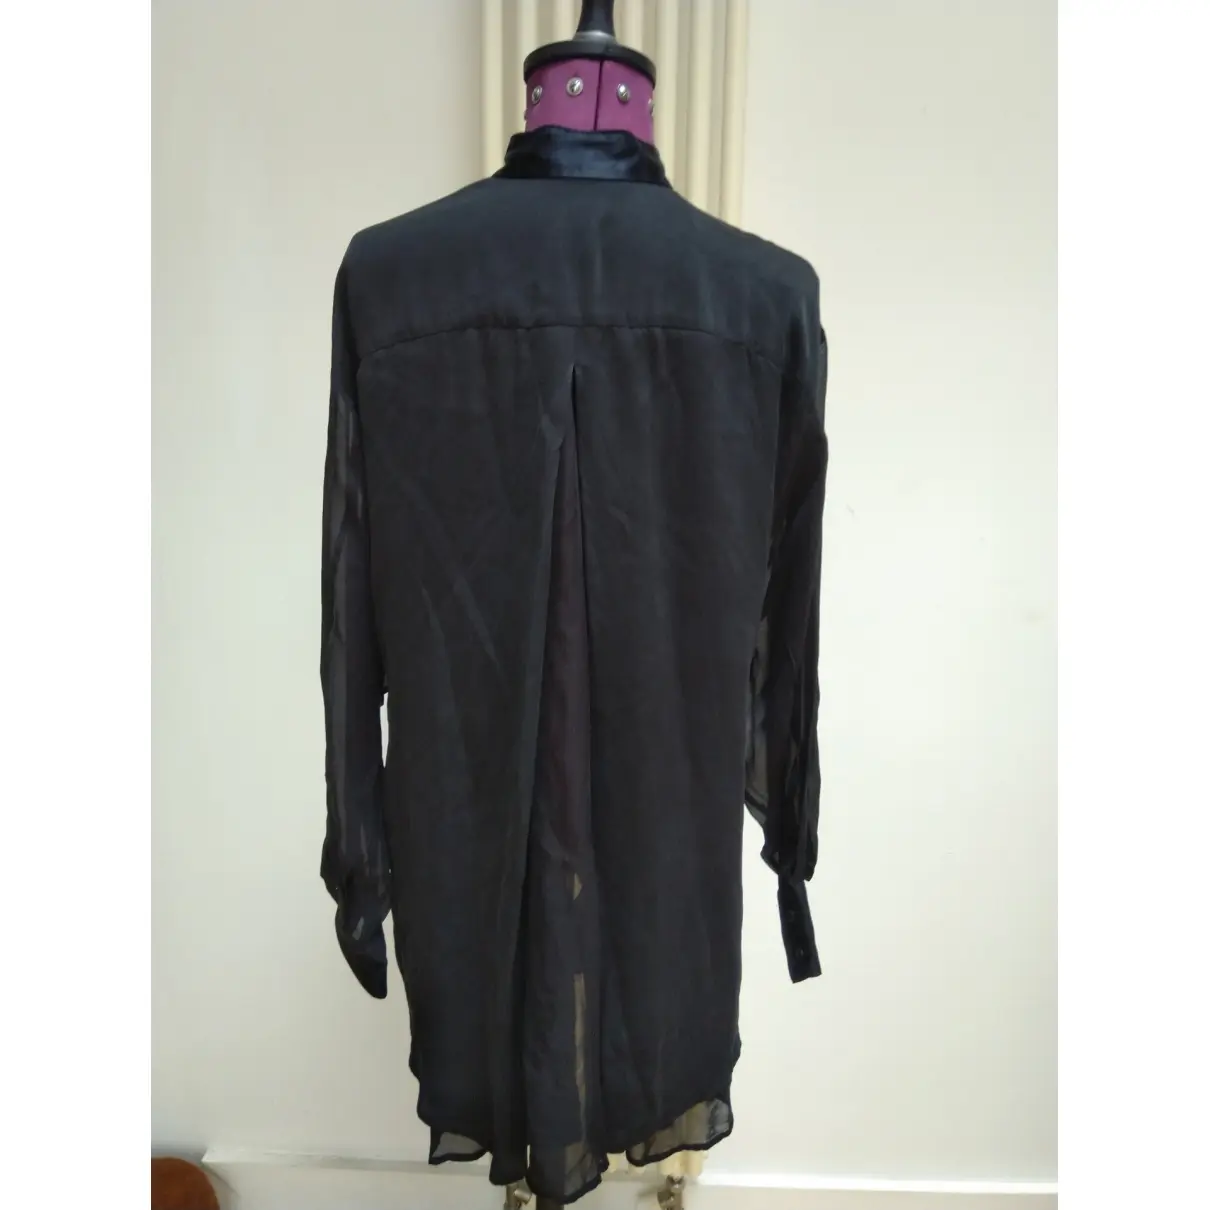 Buy Amanda Wakeley Silk blouse online